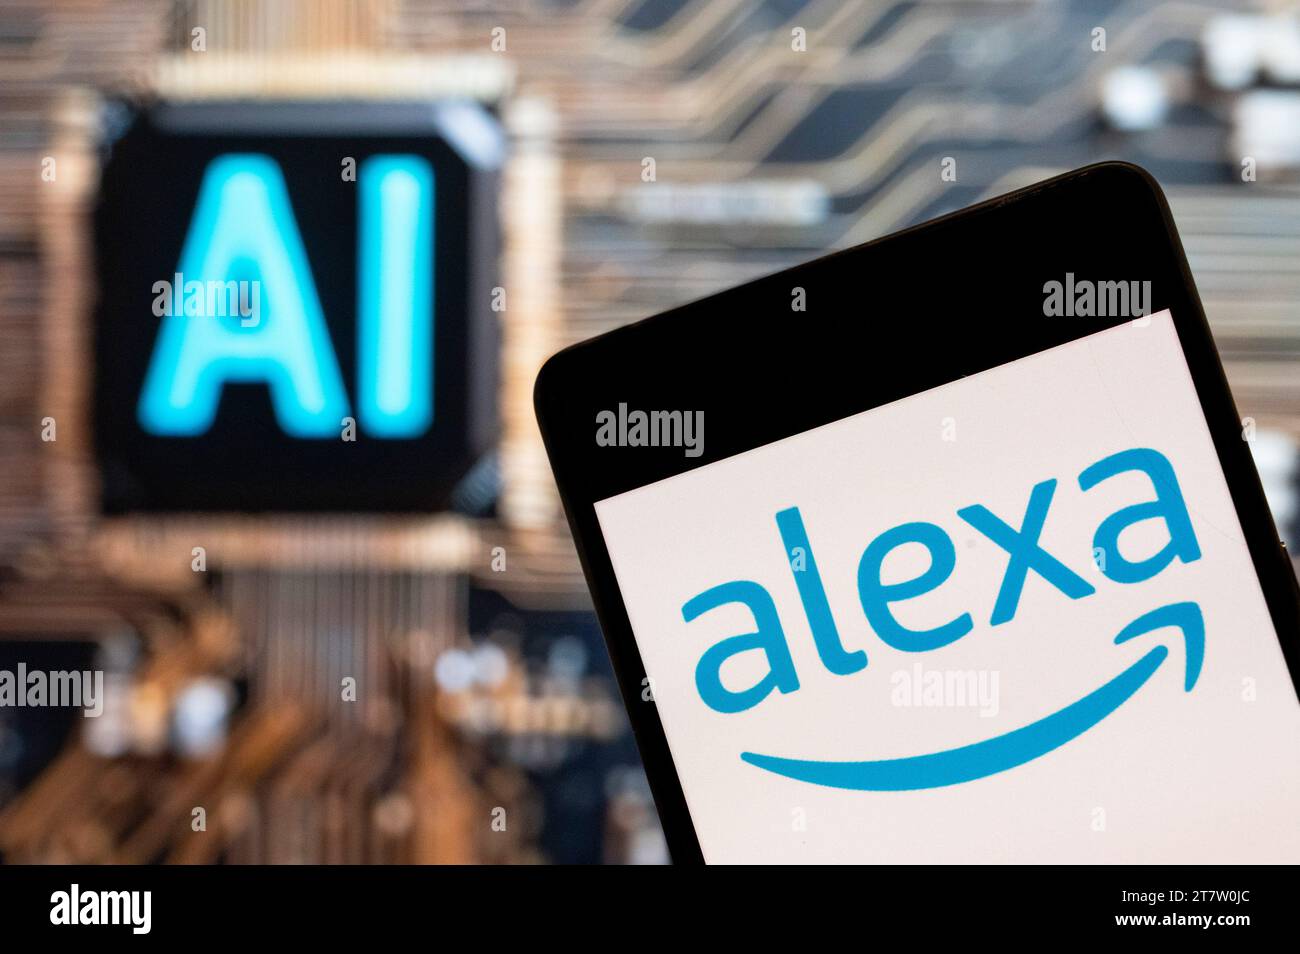 alexa logo hi-res stock photography and images - Alamy